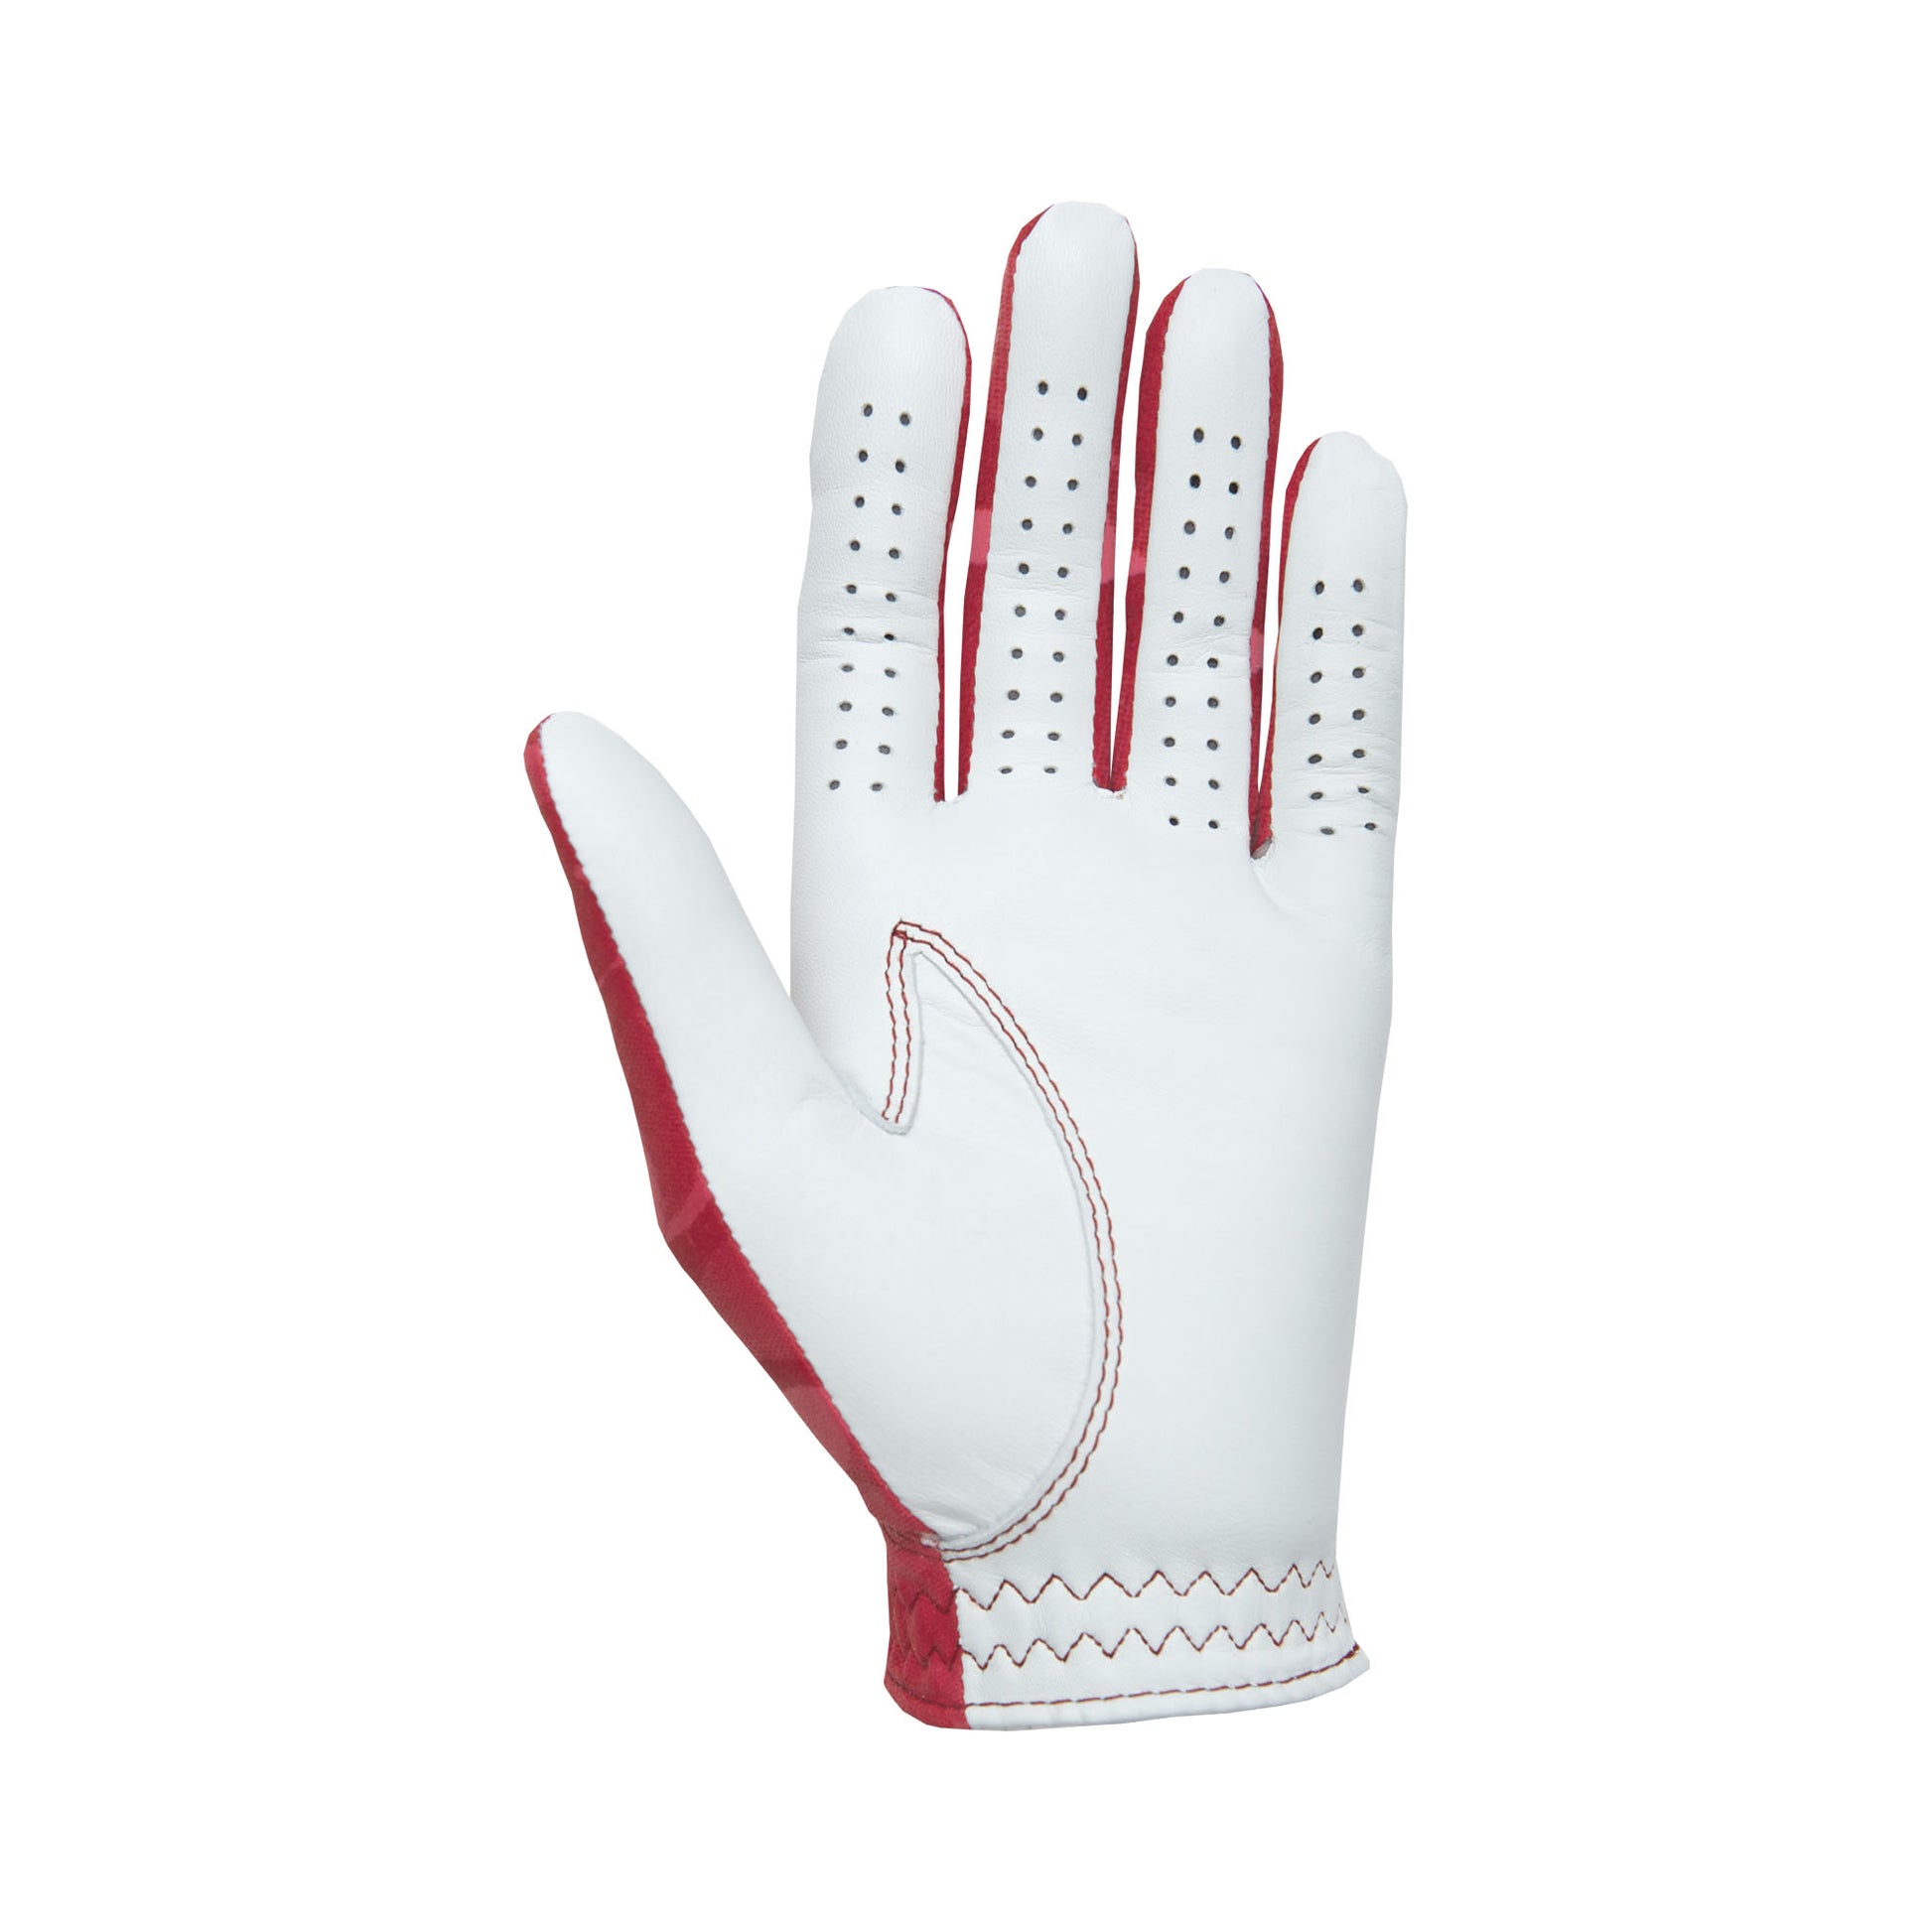 FootJoy Ladies Spectrum Golf Glove in Red Camo